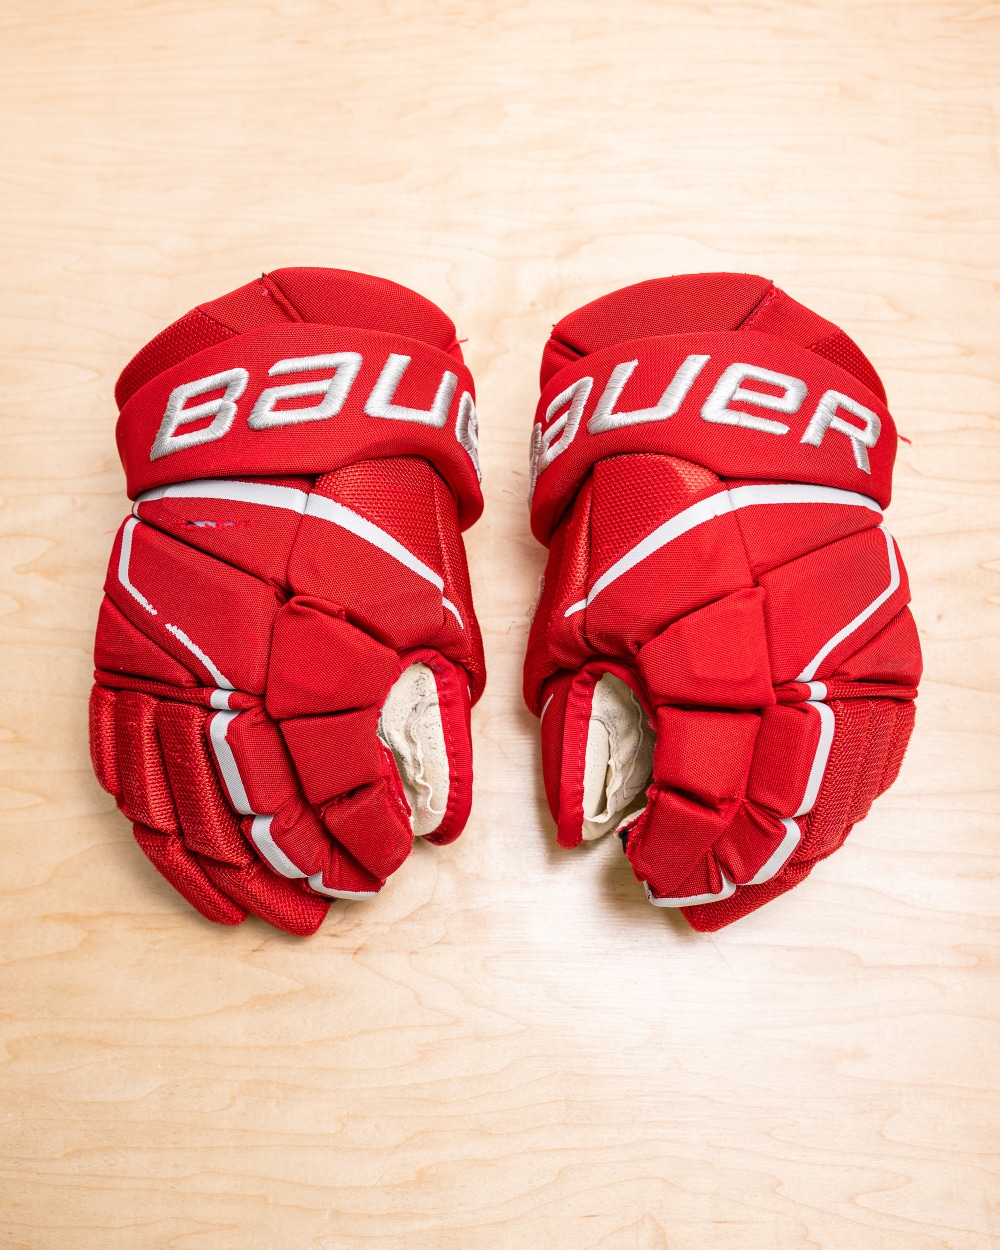 Pro Stock Bauer Vapor 2X Pro Gloves 13" - NCAA OHIO STATE